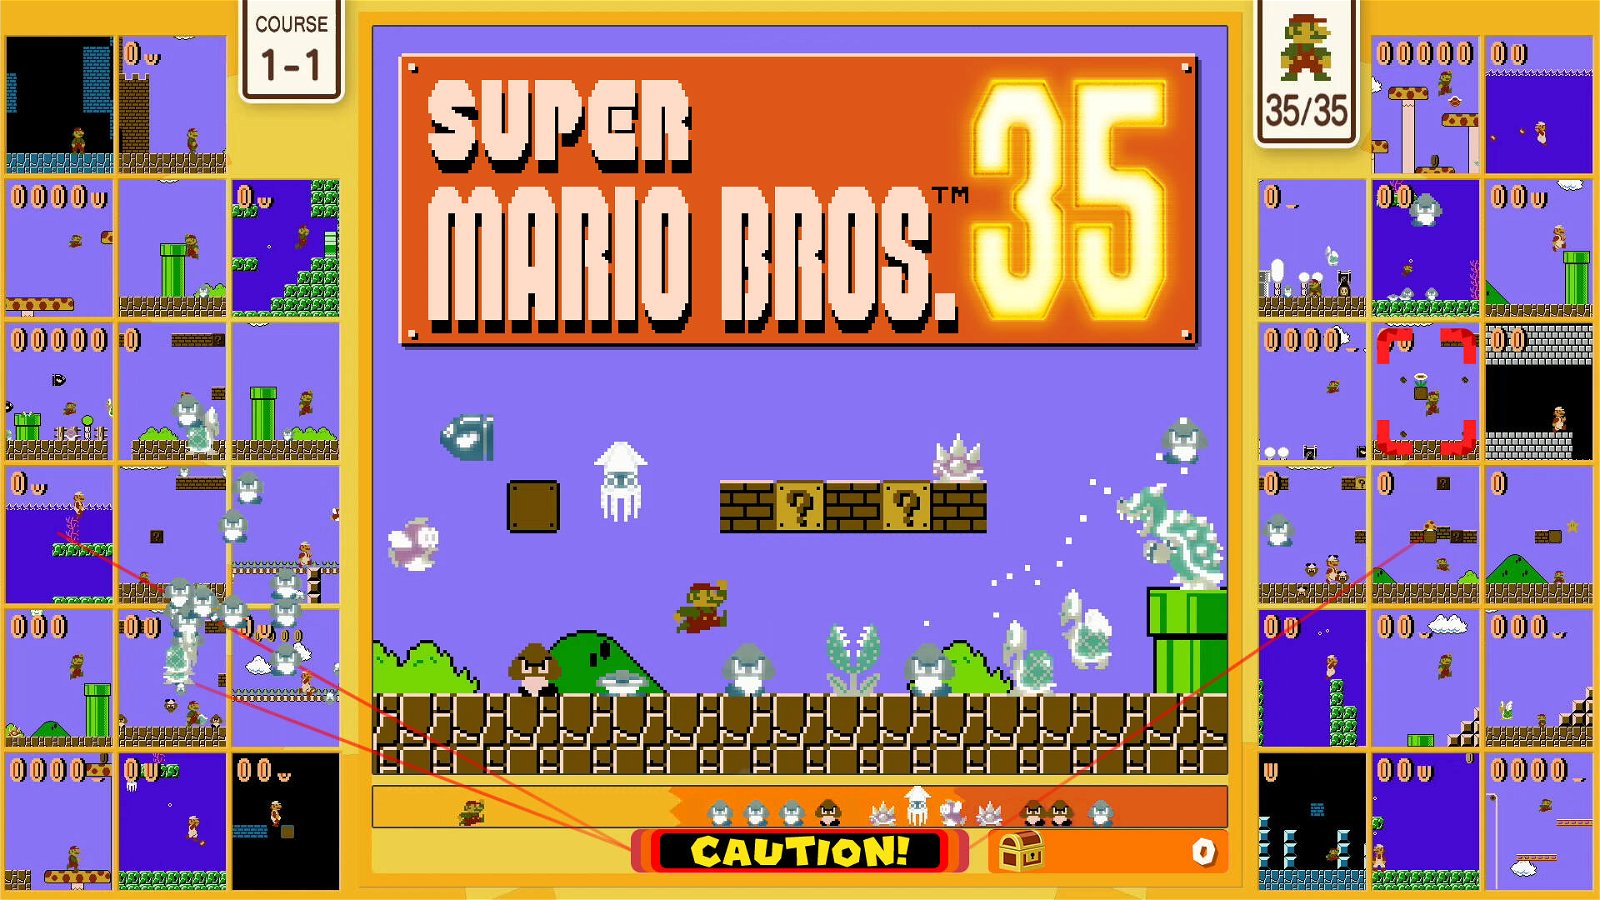 Nintendo annuncia Super Mario Bros. 35 e tante altre novità a tema Mario